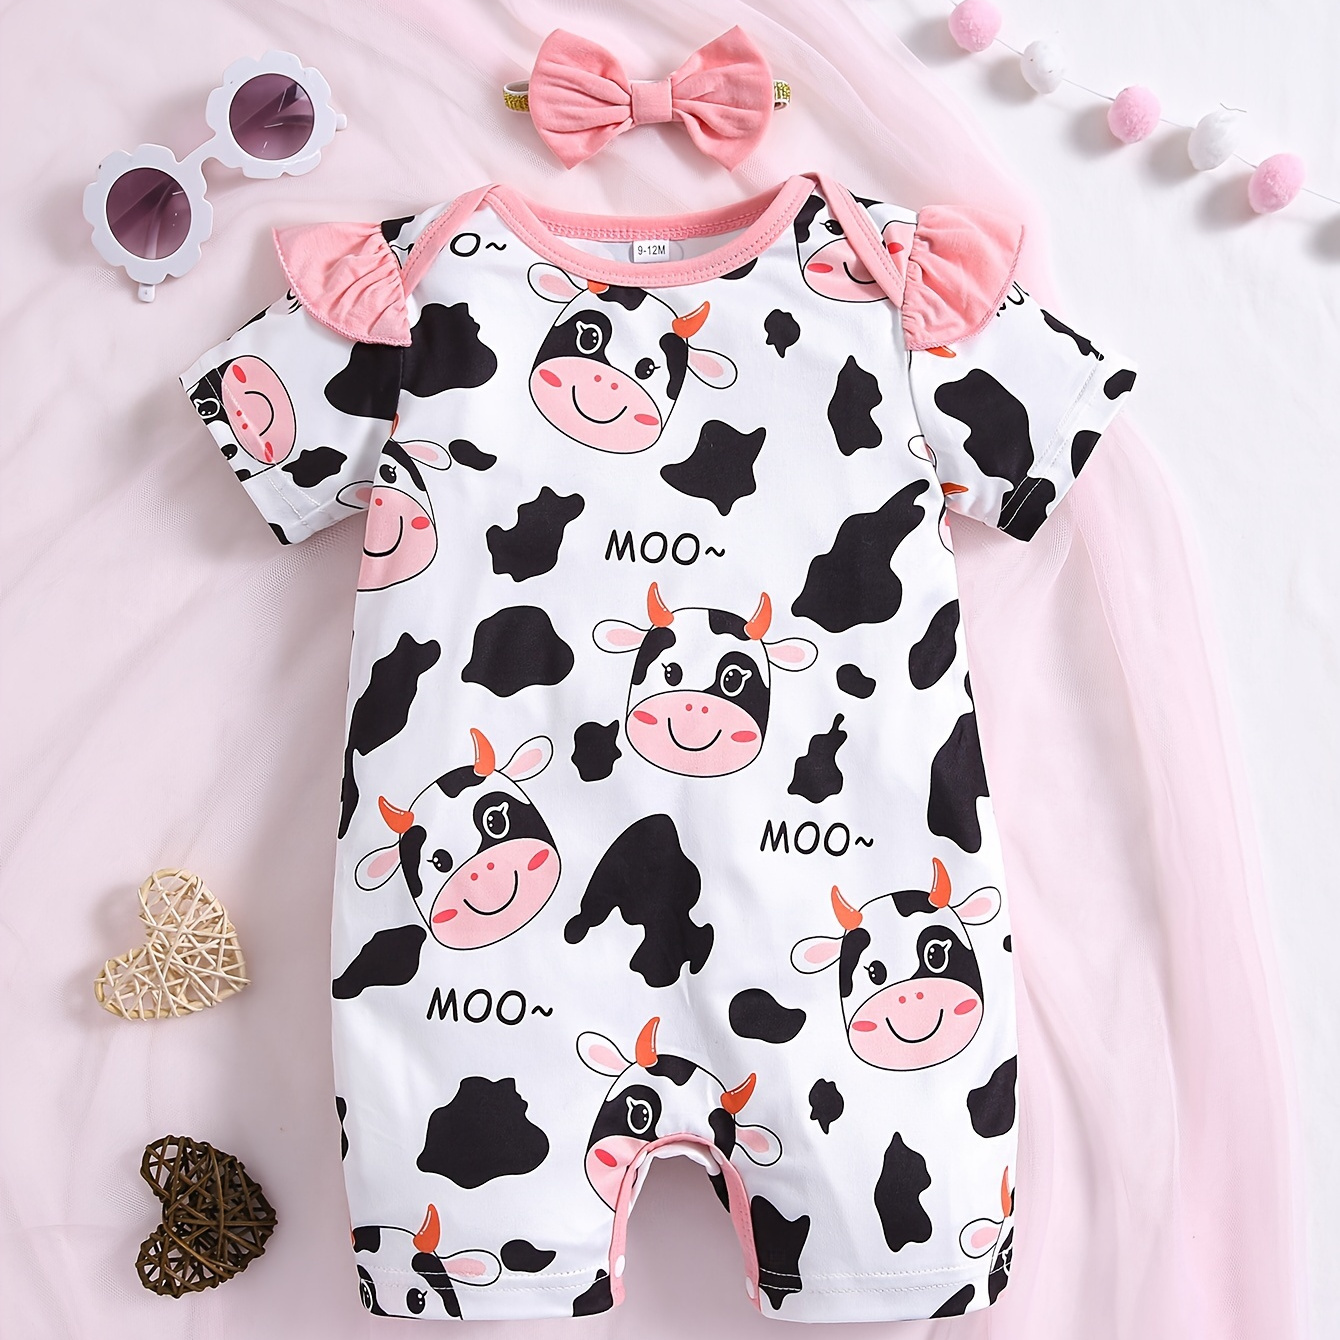 

Baby's Cartoon Cow Full Print Bodysuit, Casual Ruffle Decor Short Sleeve Romper, Toddler & Infant Girl's Clothing For Summer, As Gift